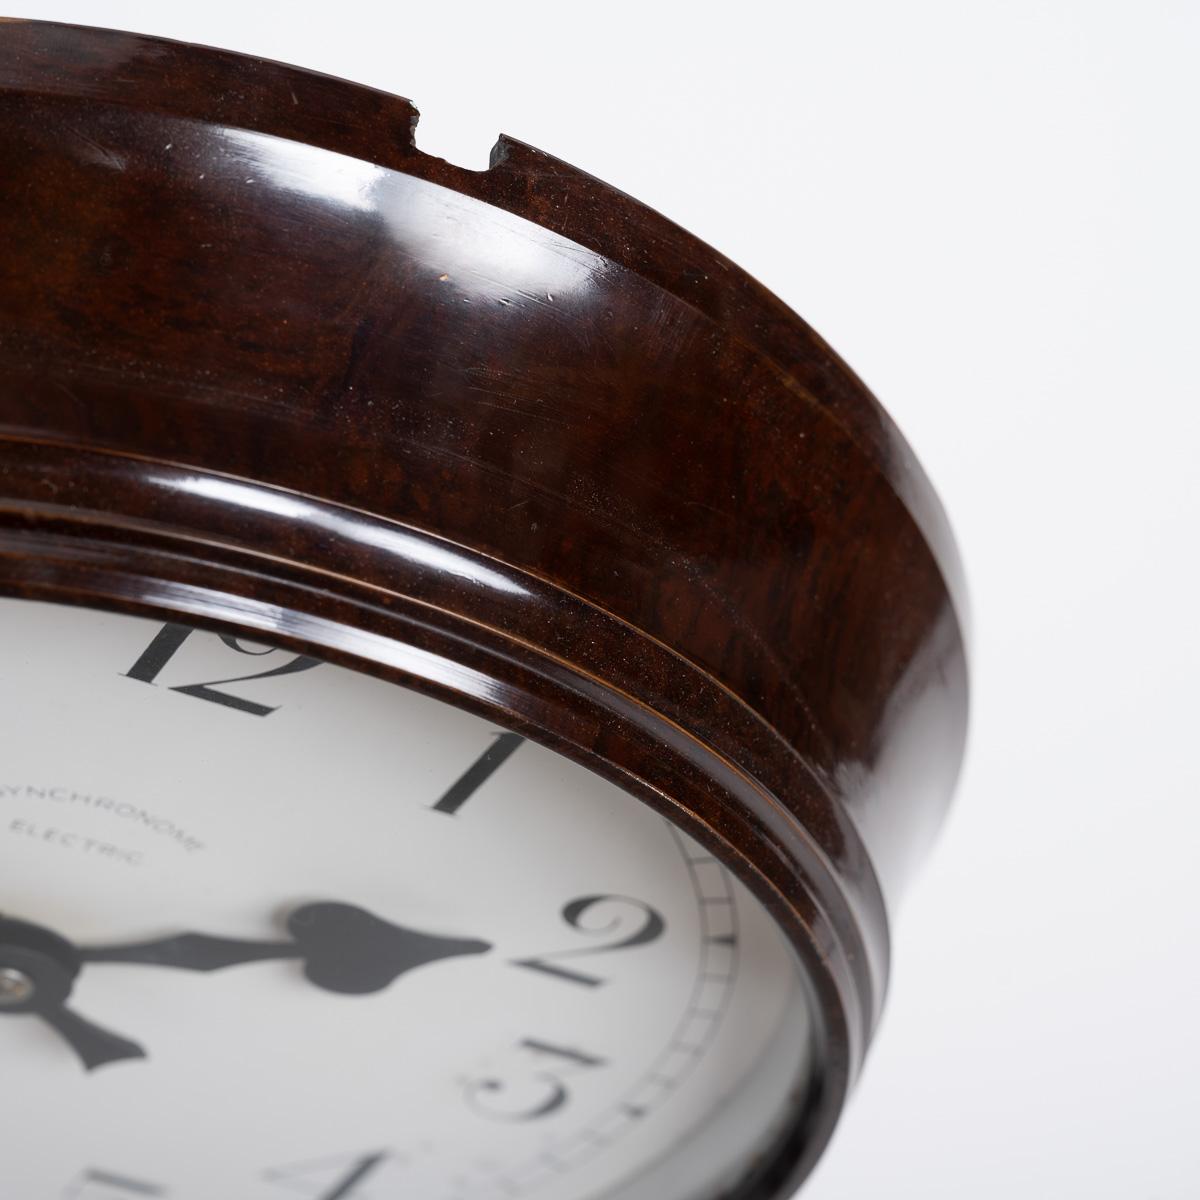 Synchronome Vintage Industrial Slave Clock In Bakelite Case For Sale 6